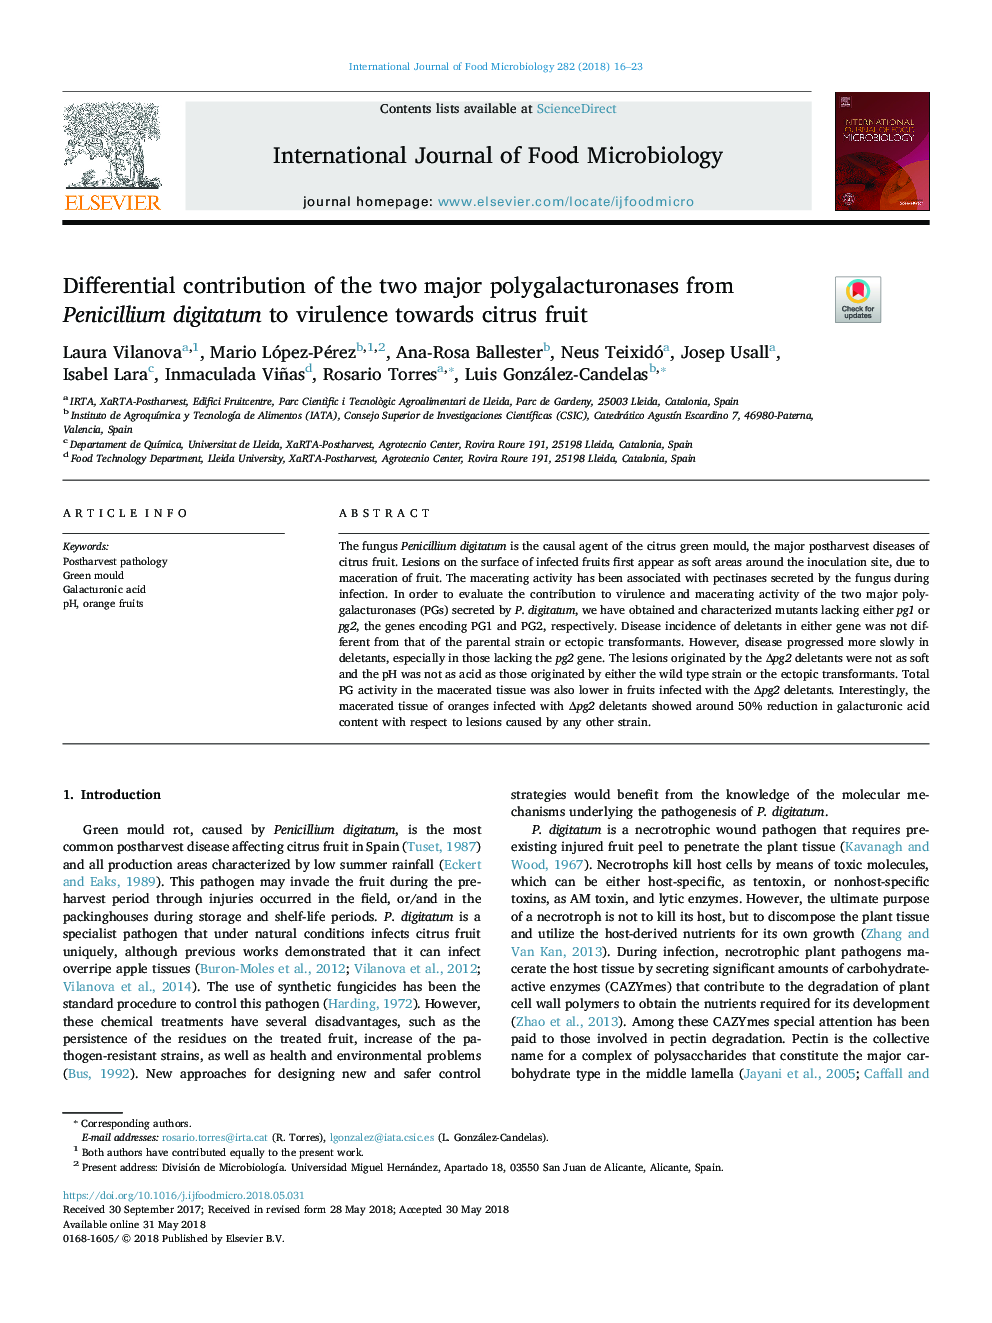 Differential contribution of the two major polygalacturonases from Penicillium digitatum to virulence towards citrus fruit